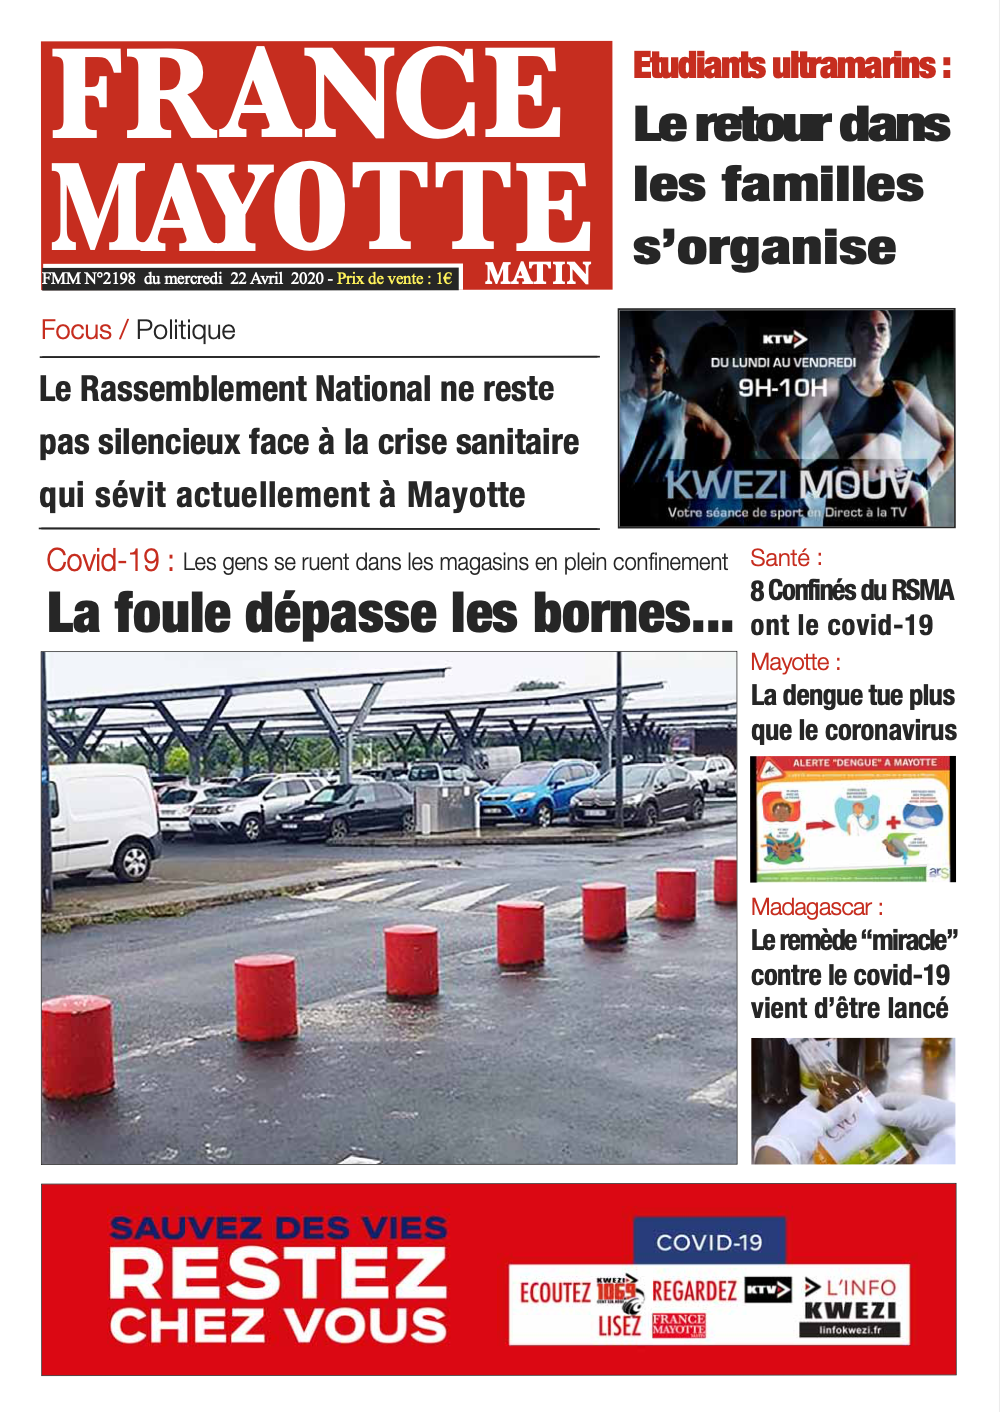 France Mayotte Mercredi 22 avril 2020